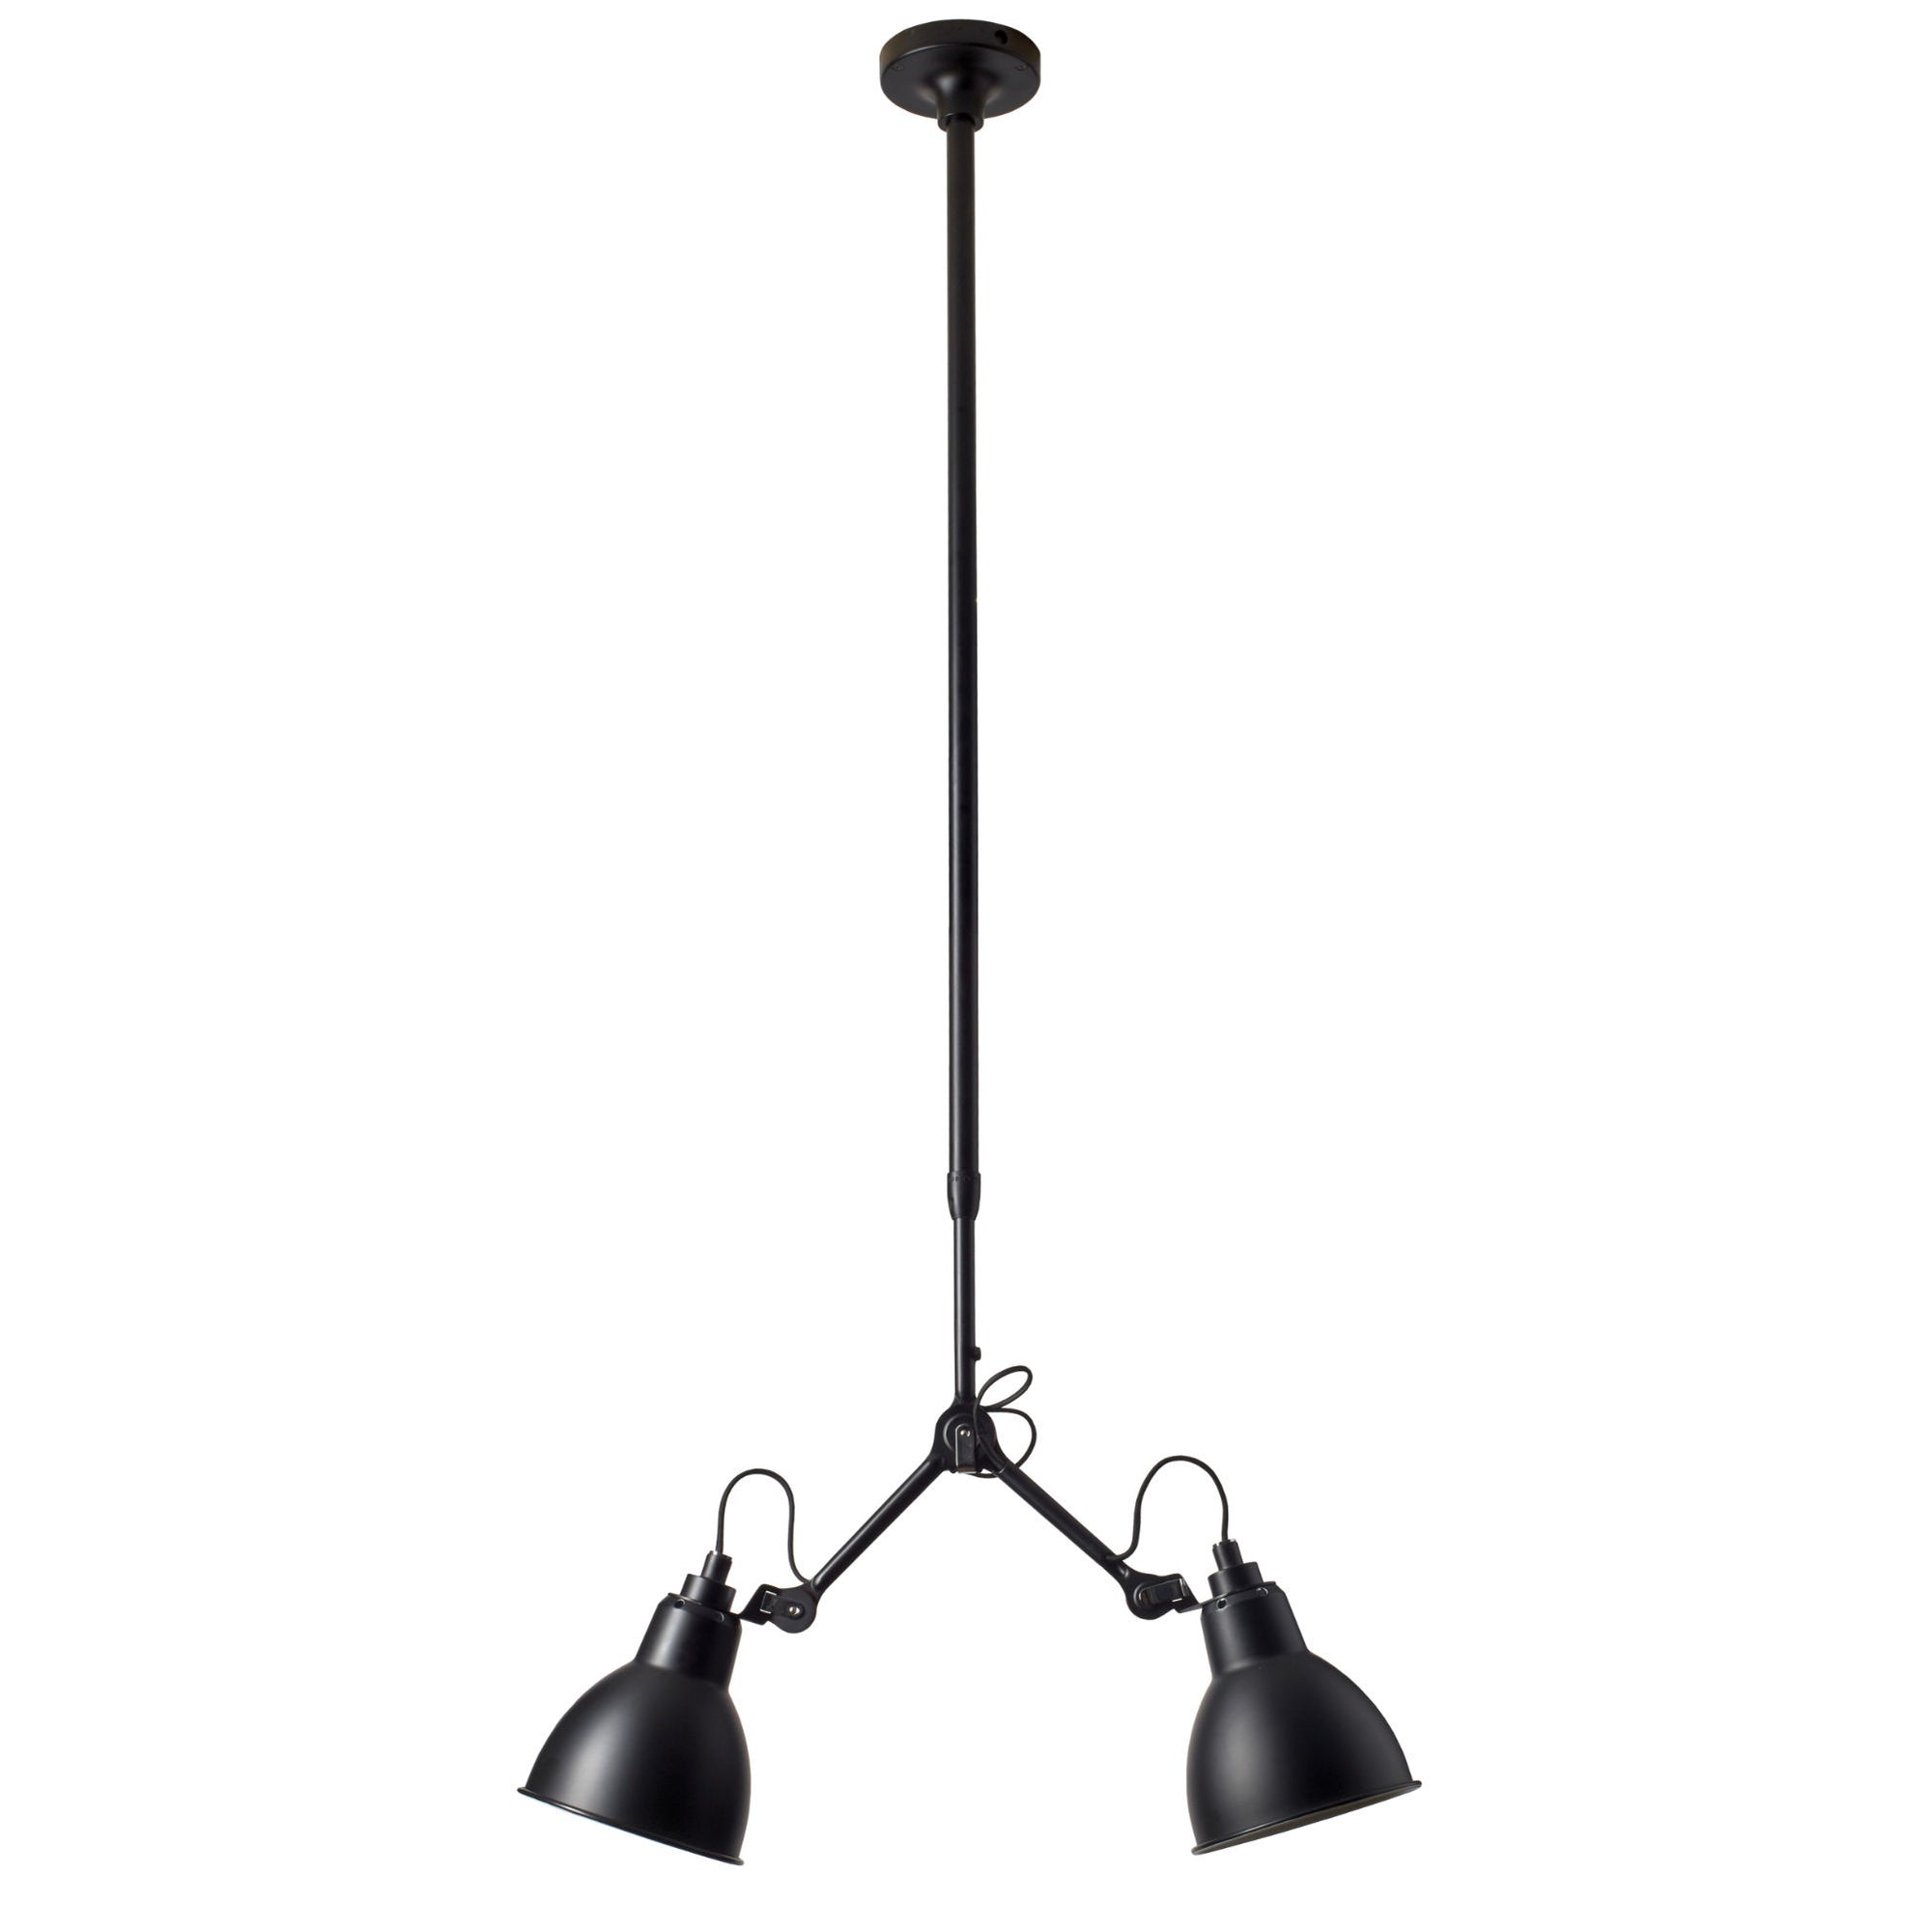 DCW Lampe Gras 305 ceiling light, black/black